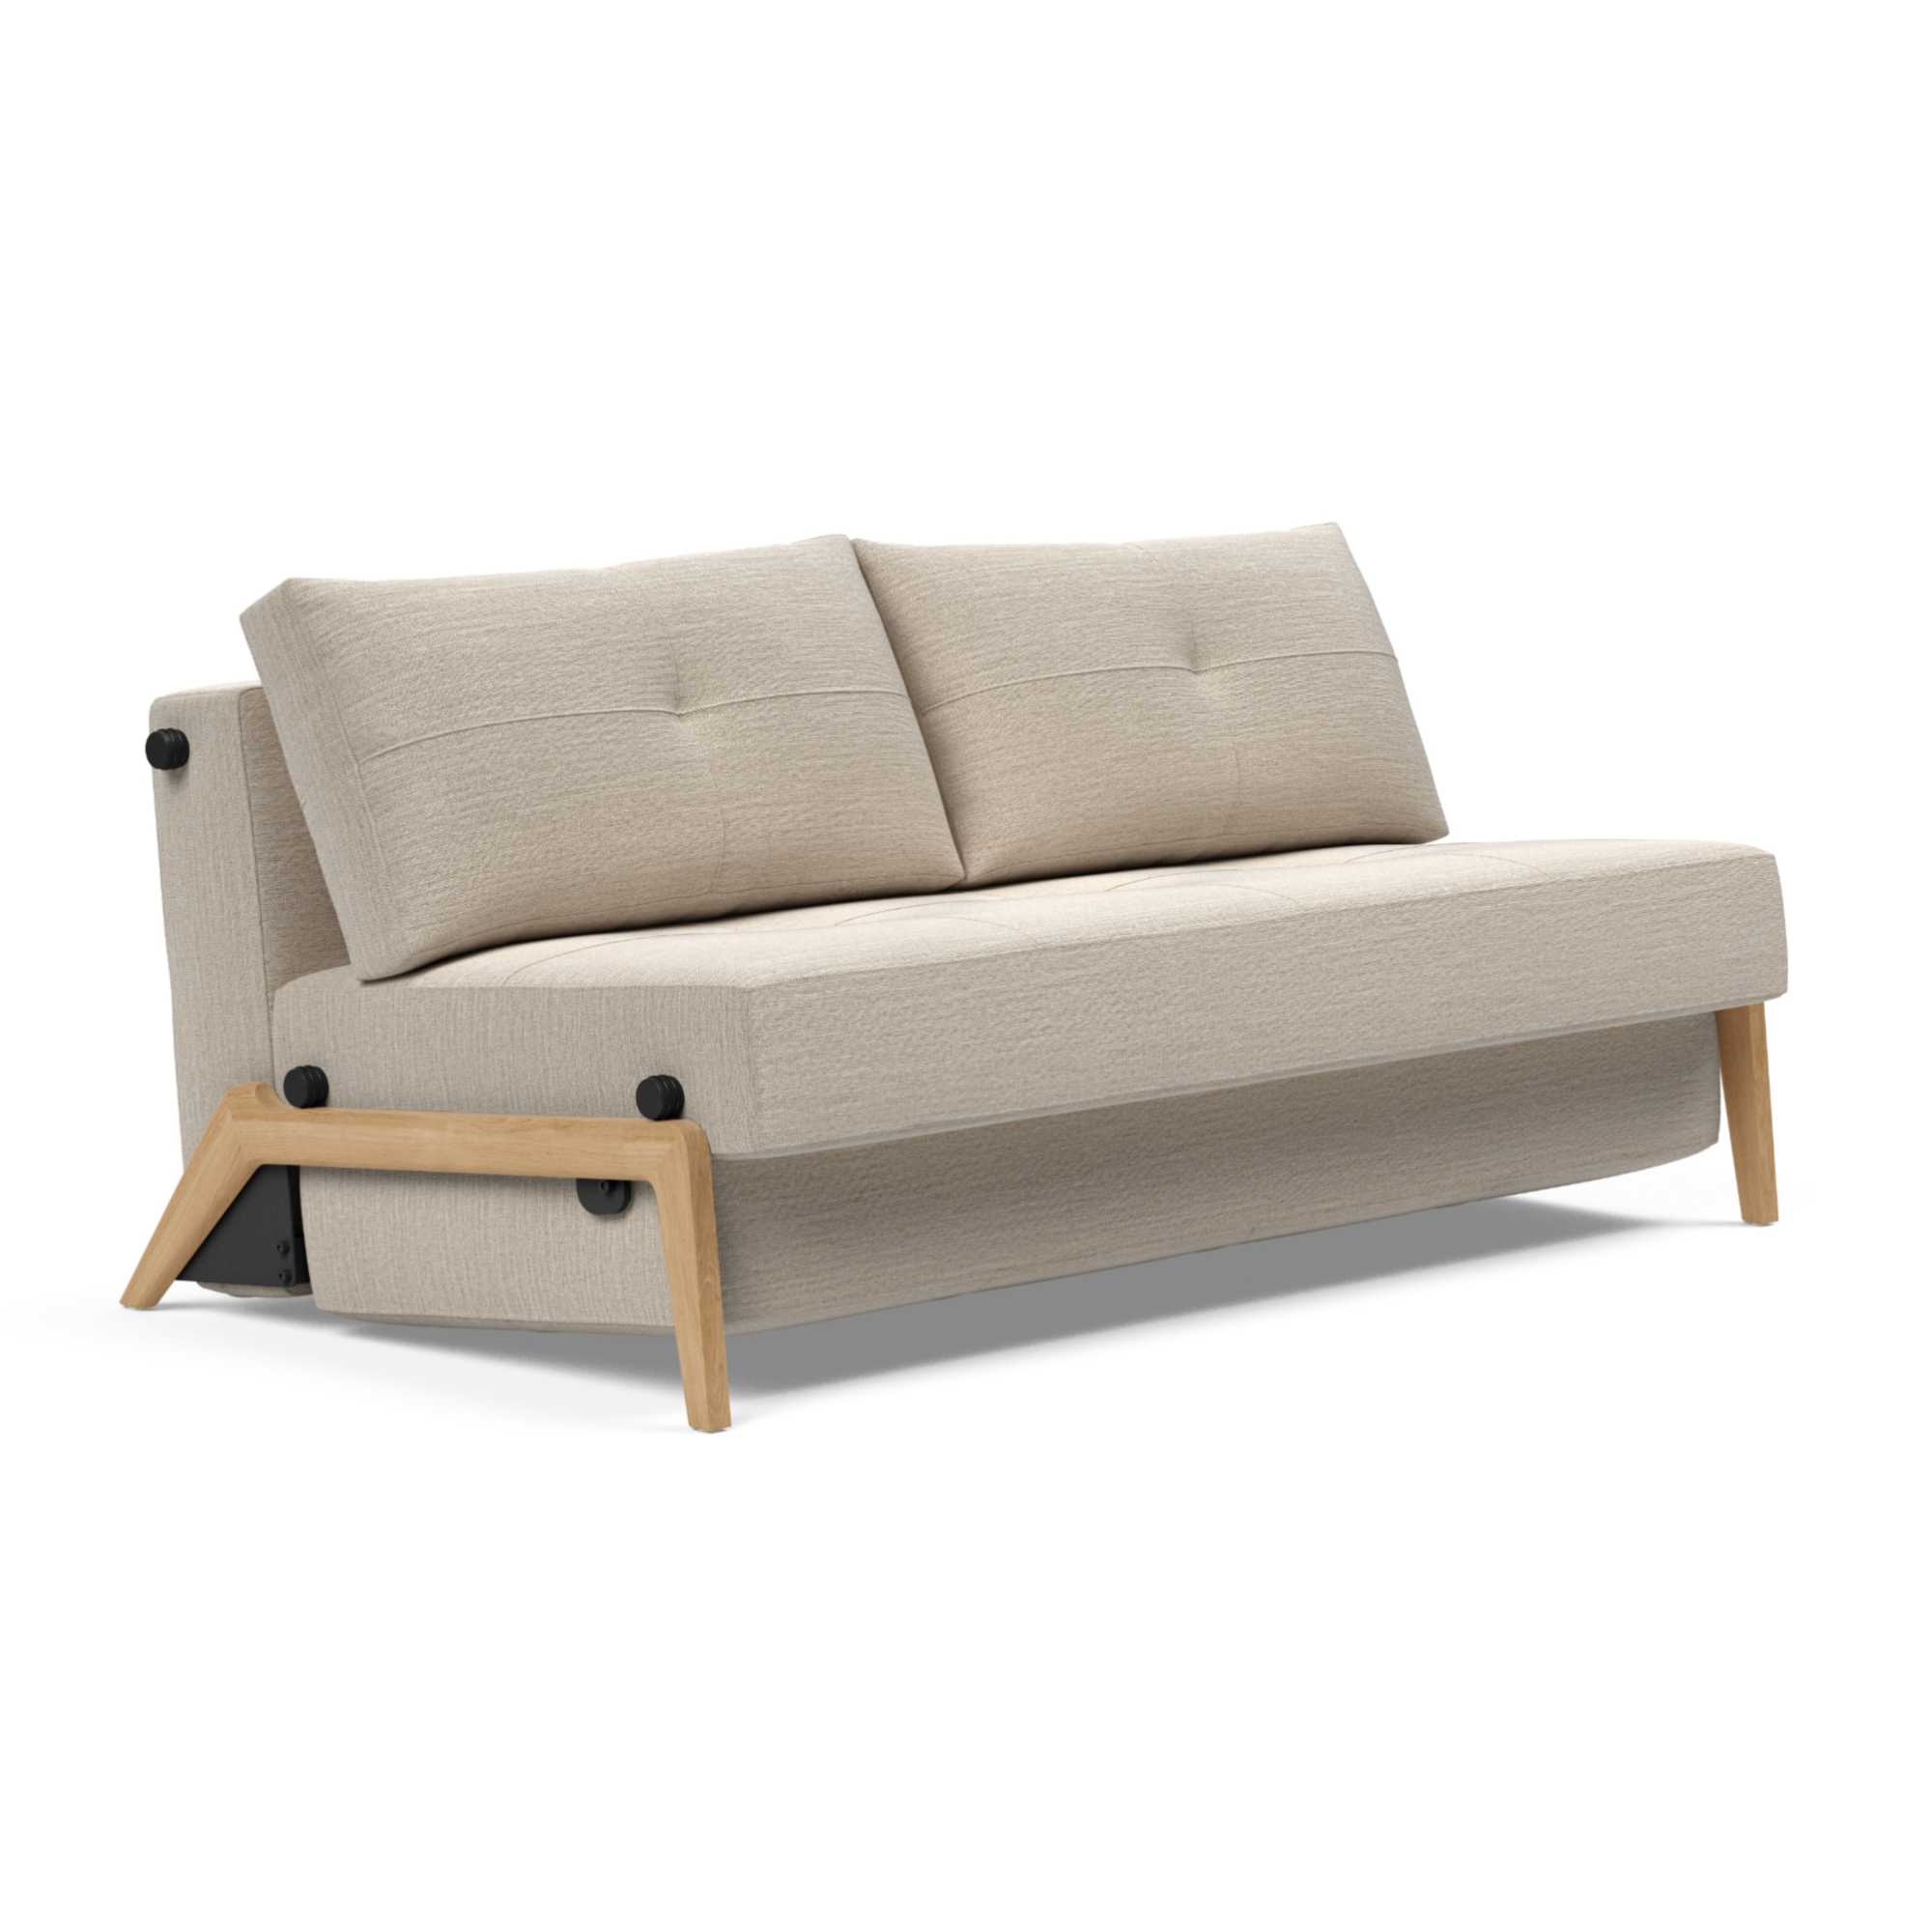 Innovation Living Cubed 160 Wood Sofa Bed, 612BlidaSandGrey w168xd98xh79cm